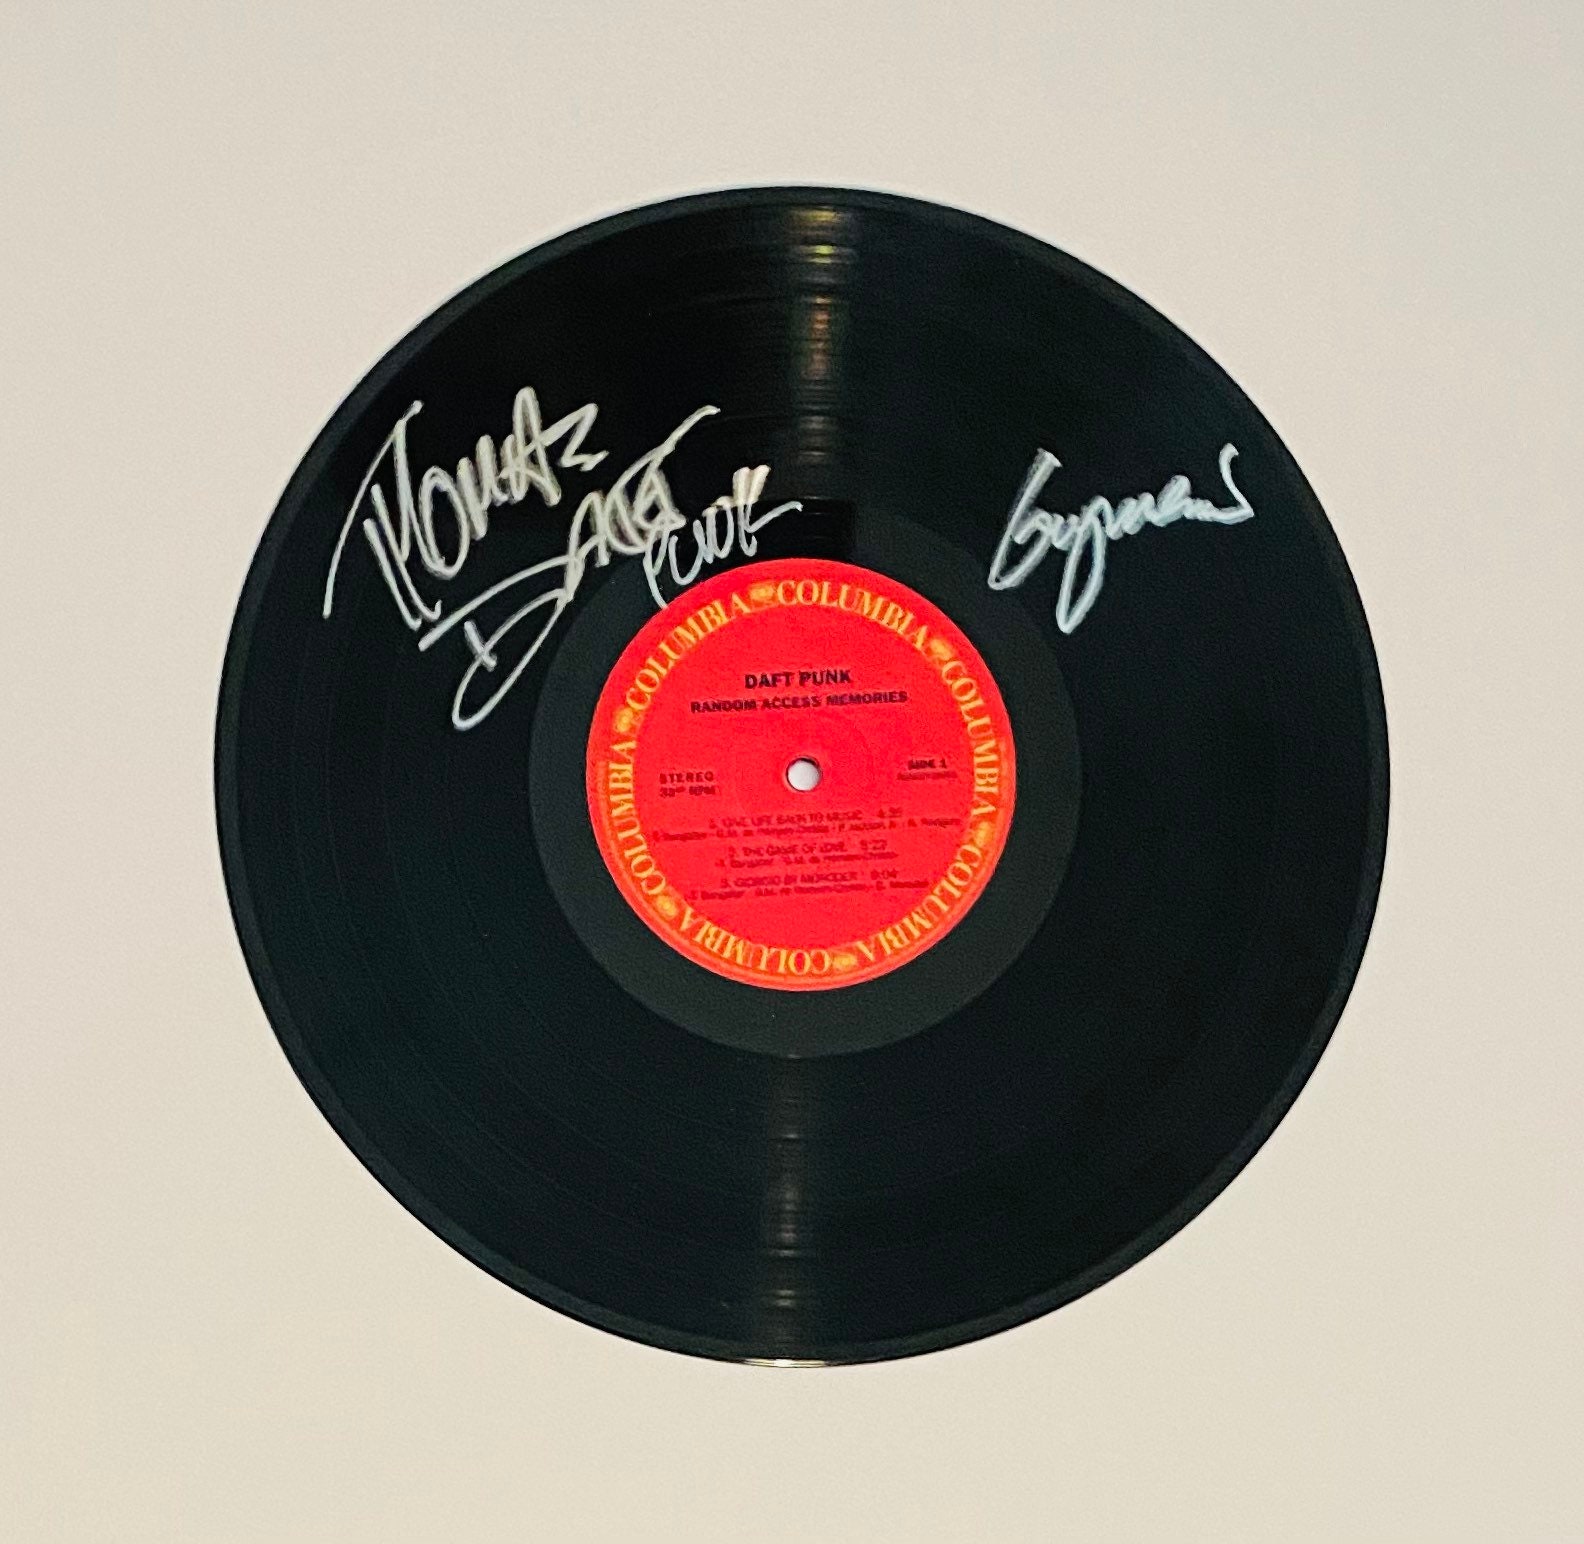 Daft Punk Signed Vinyl Record Display